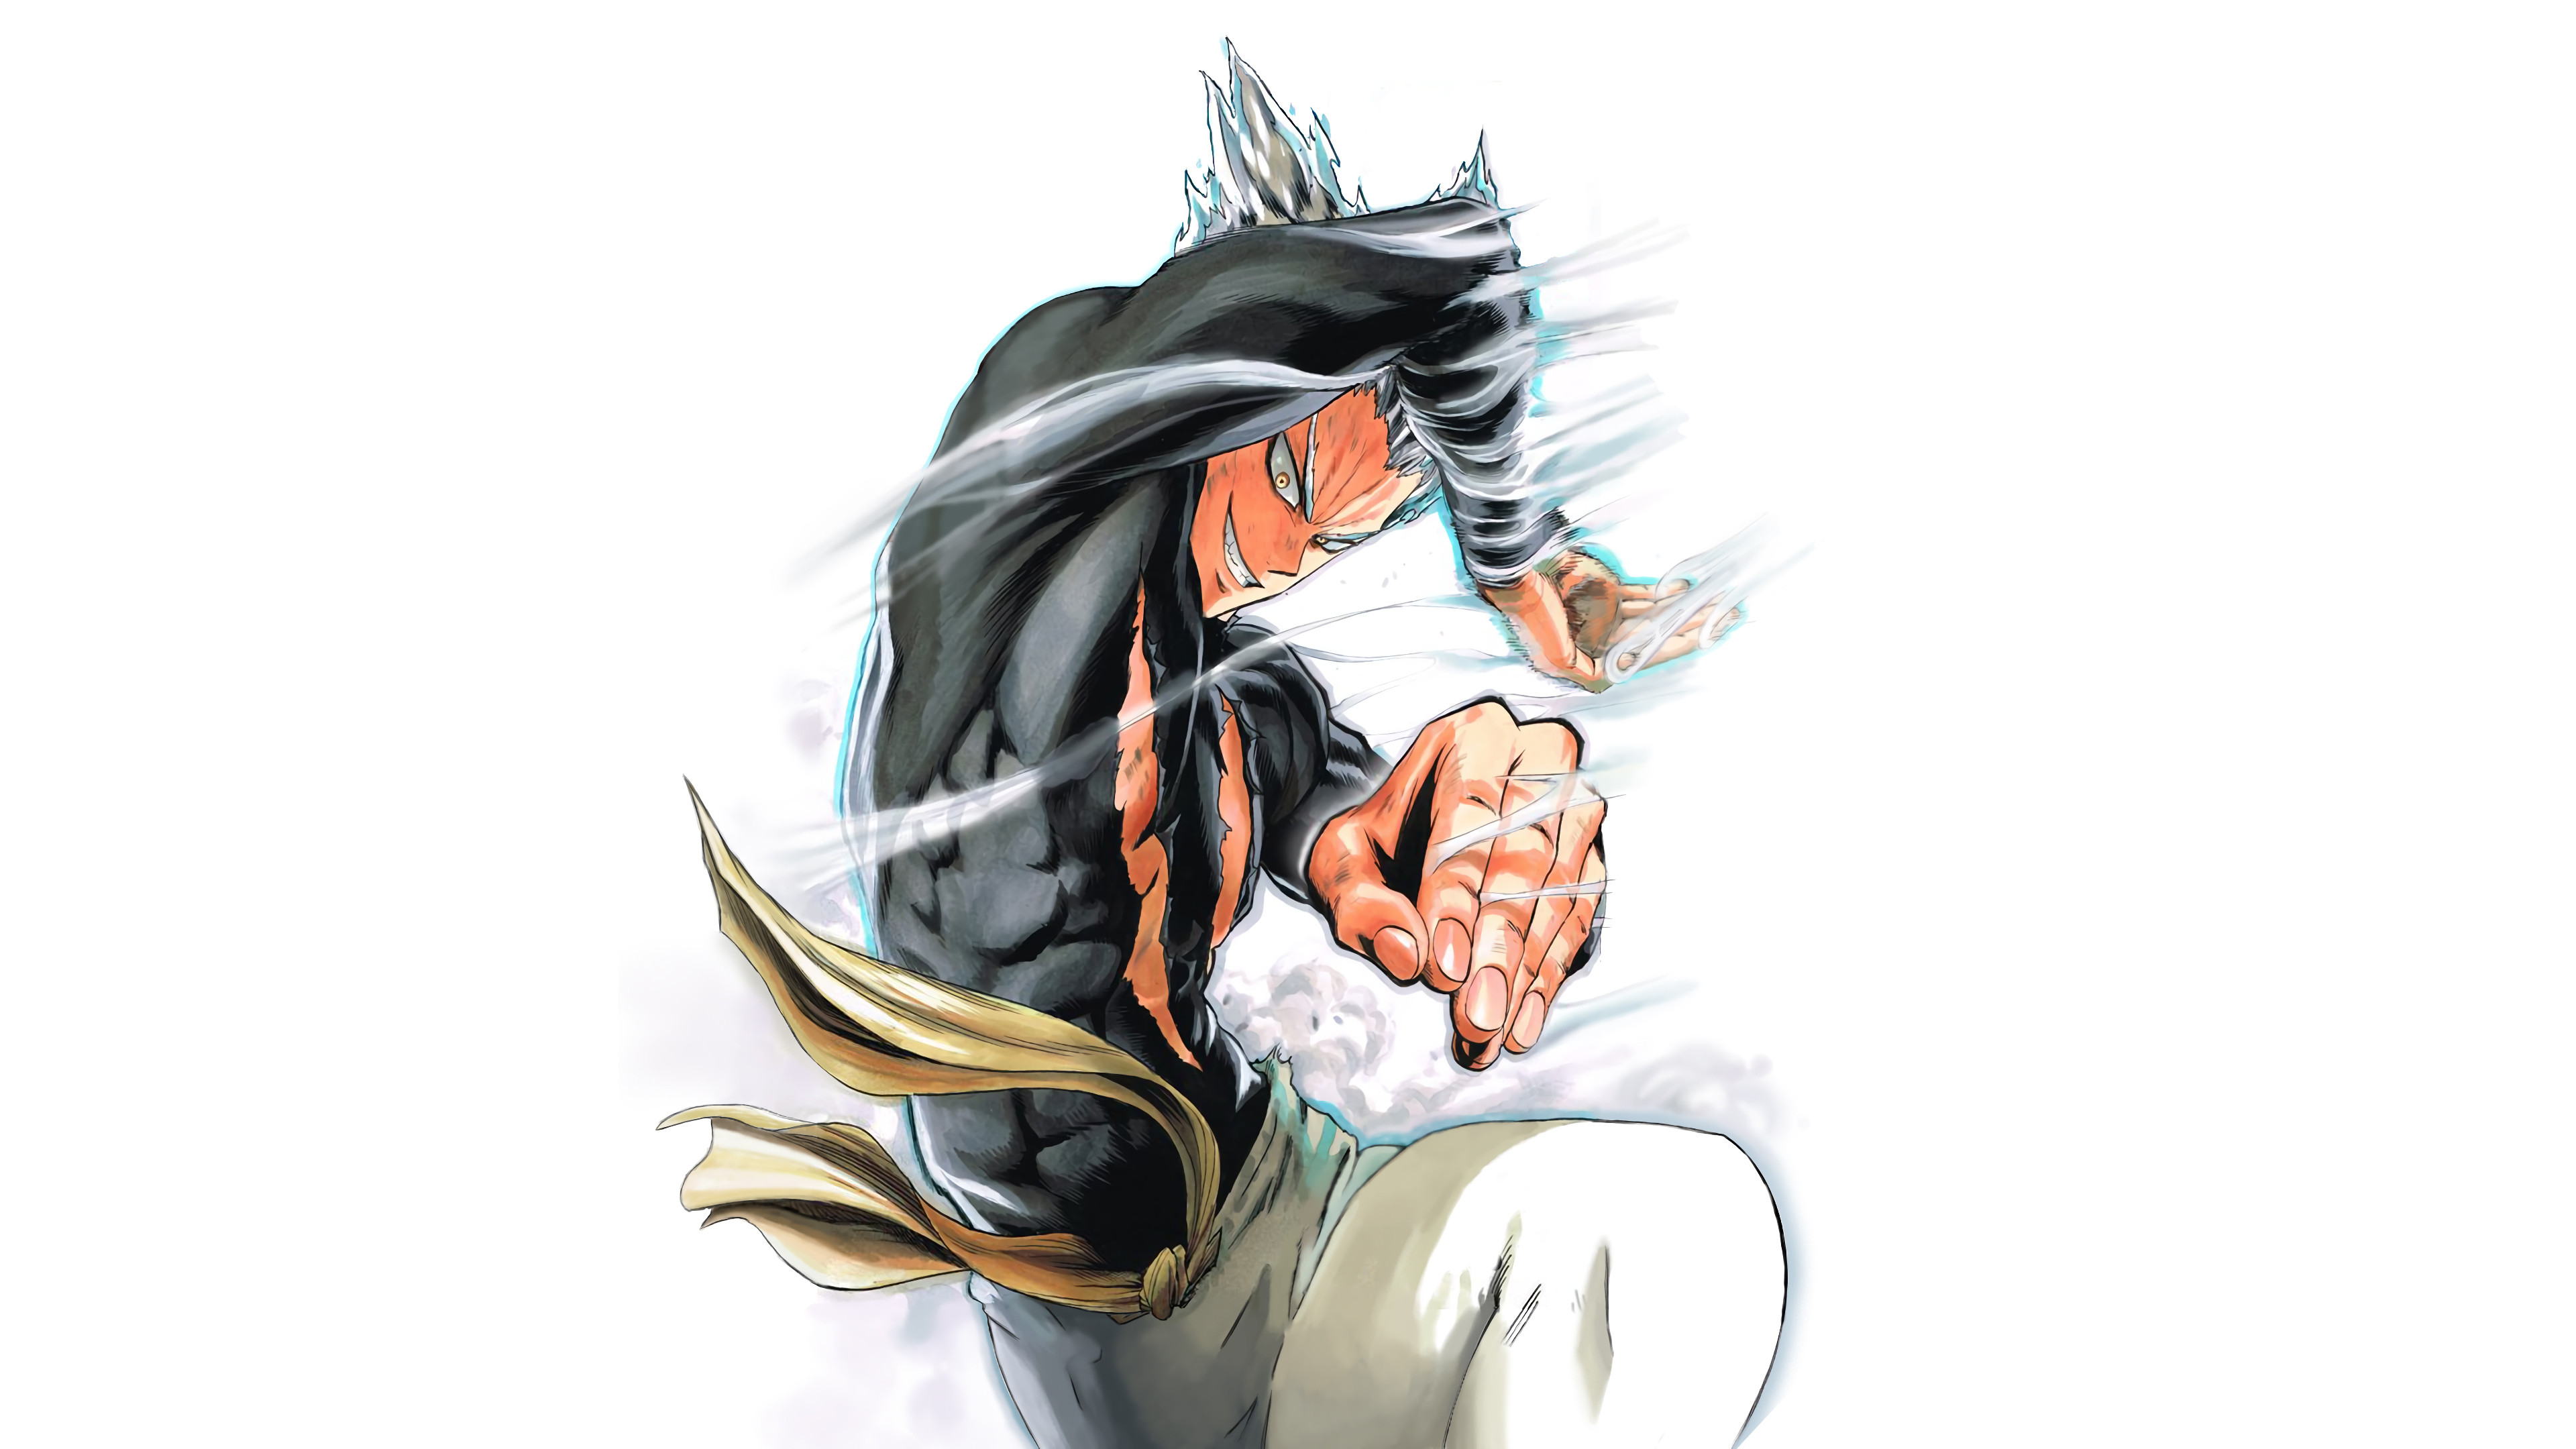 Anime One-Punch Man Garou (One-Punch Man) #8K #wallpaper #hdwallpaper # desktop